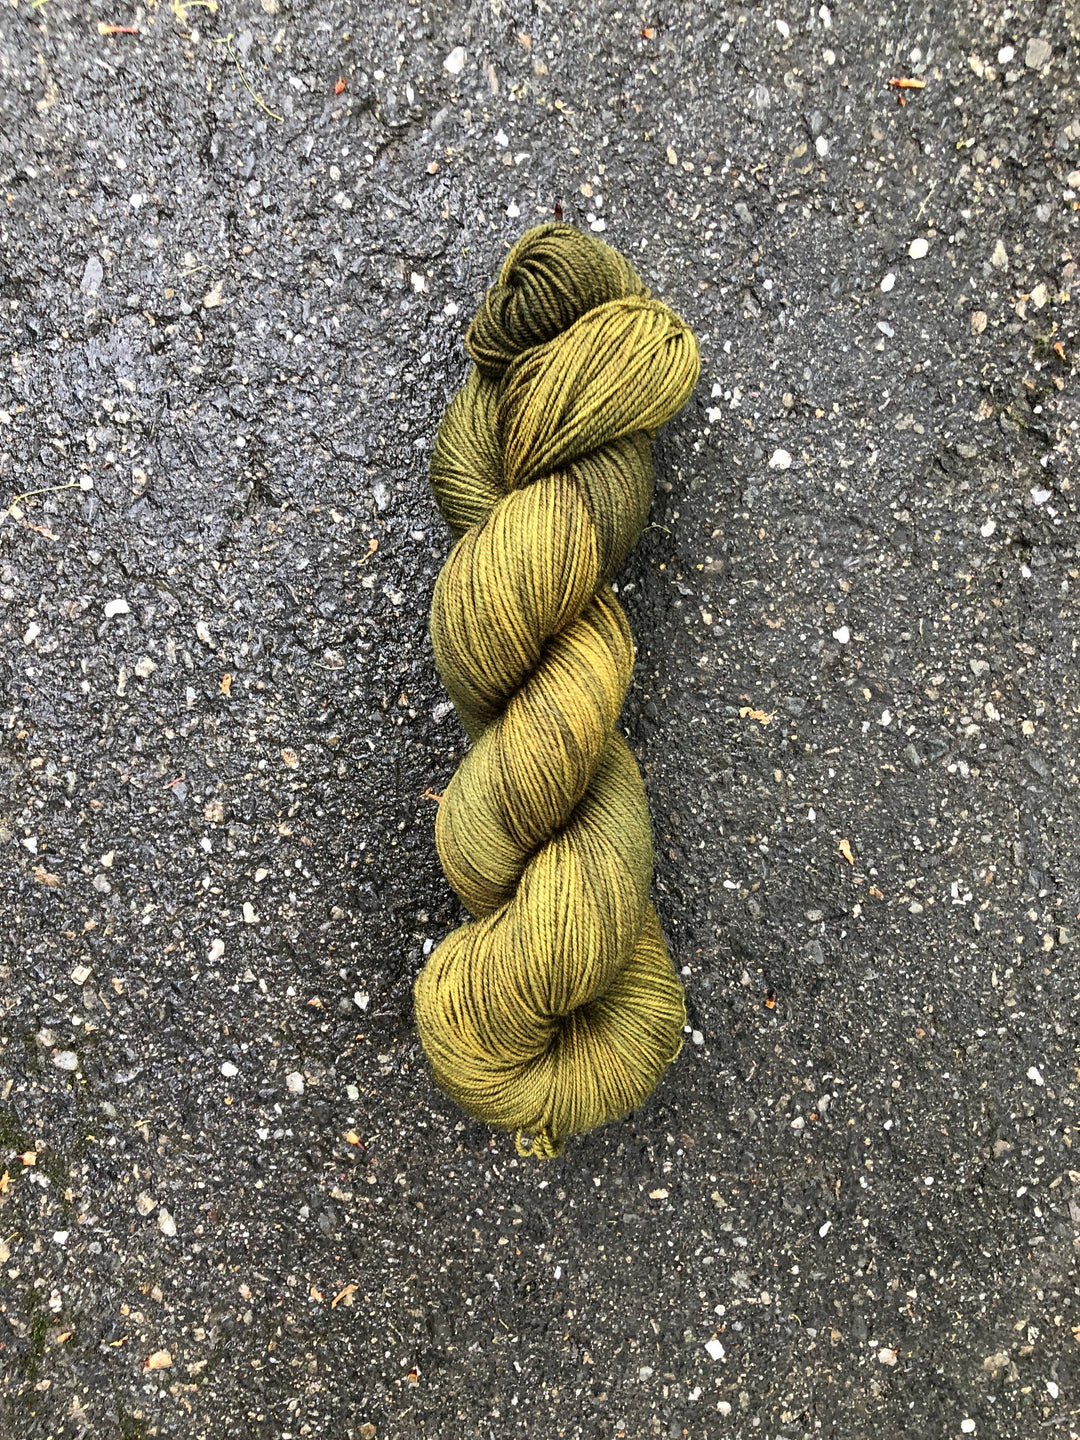 A skein of mossy green yarn.